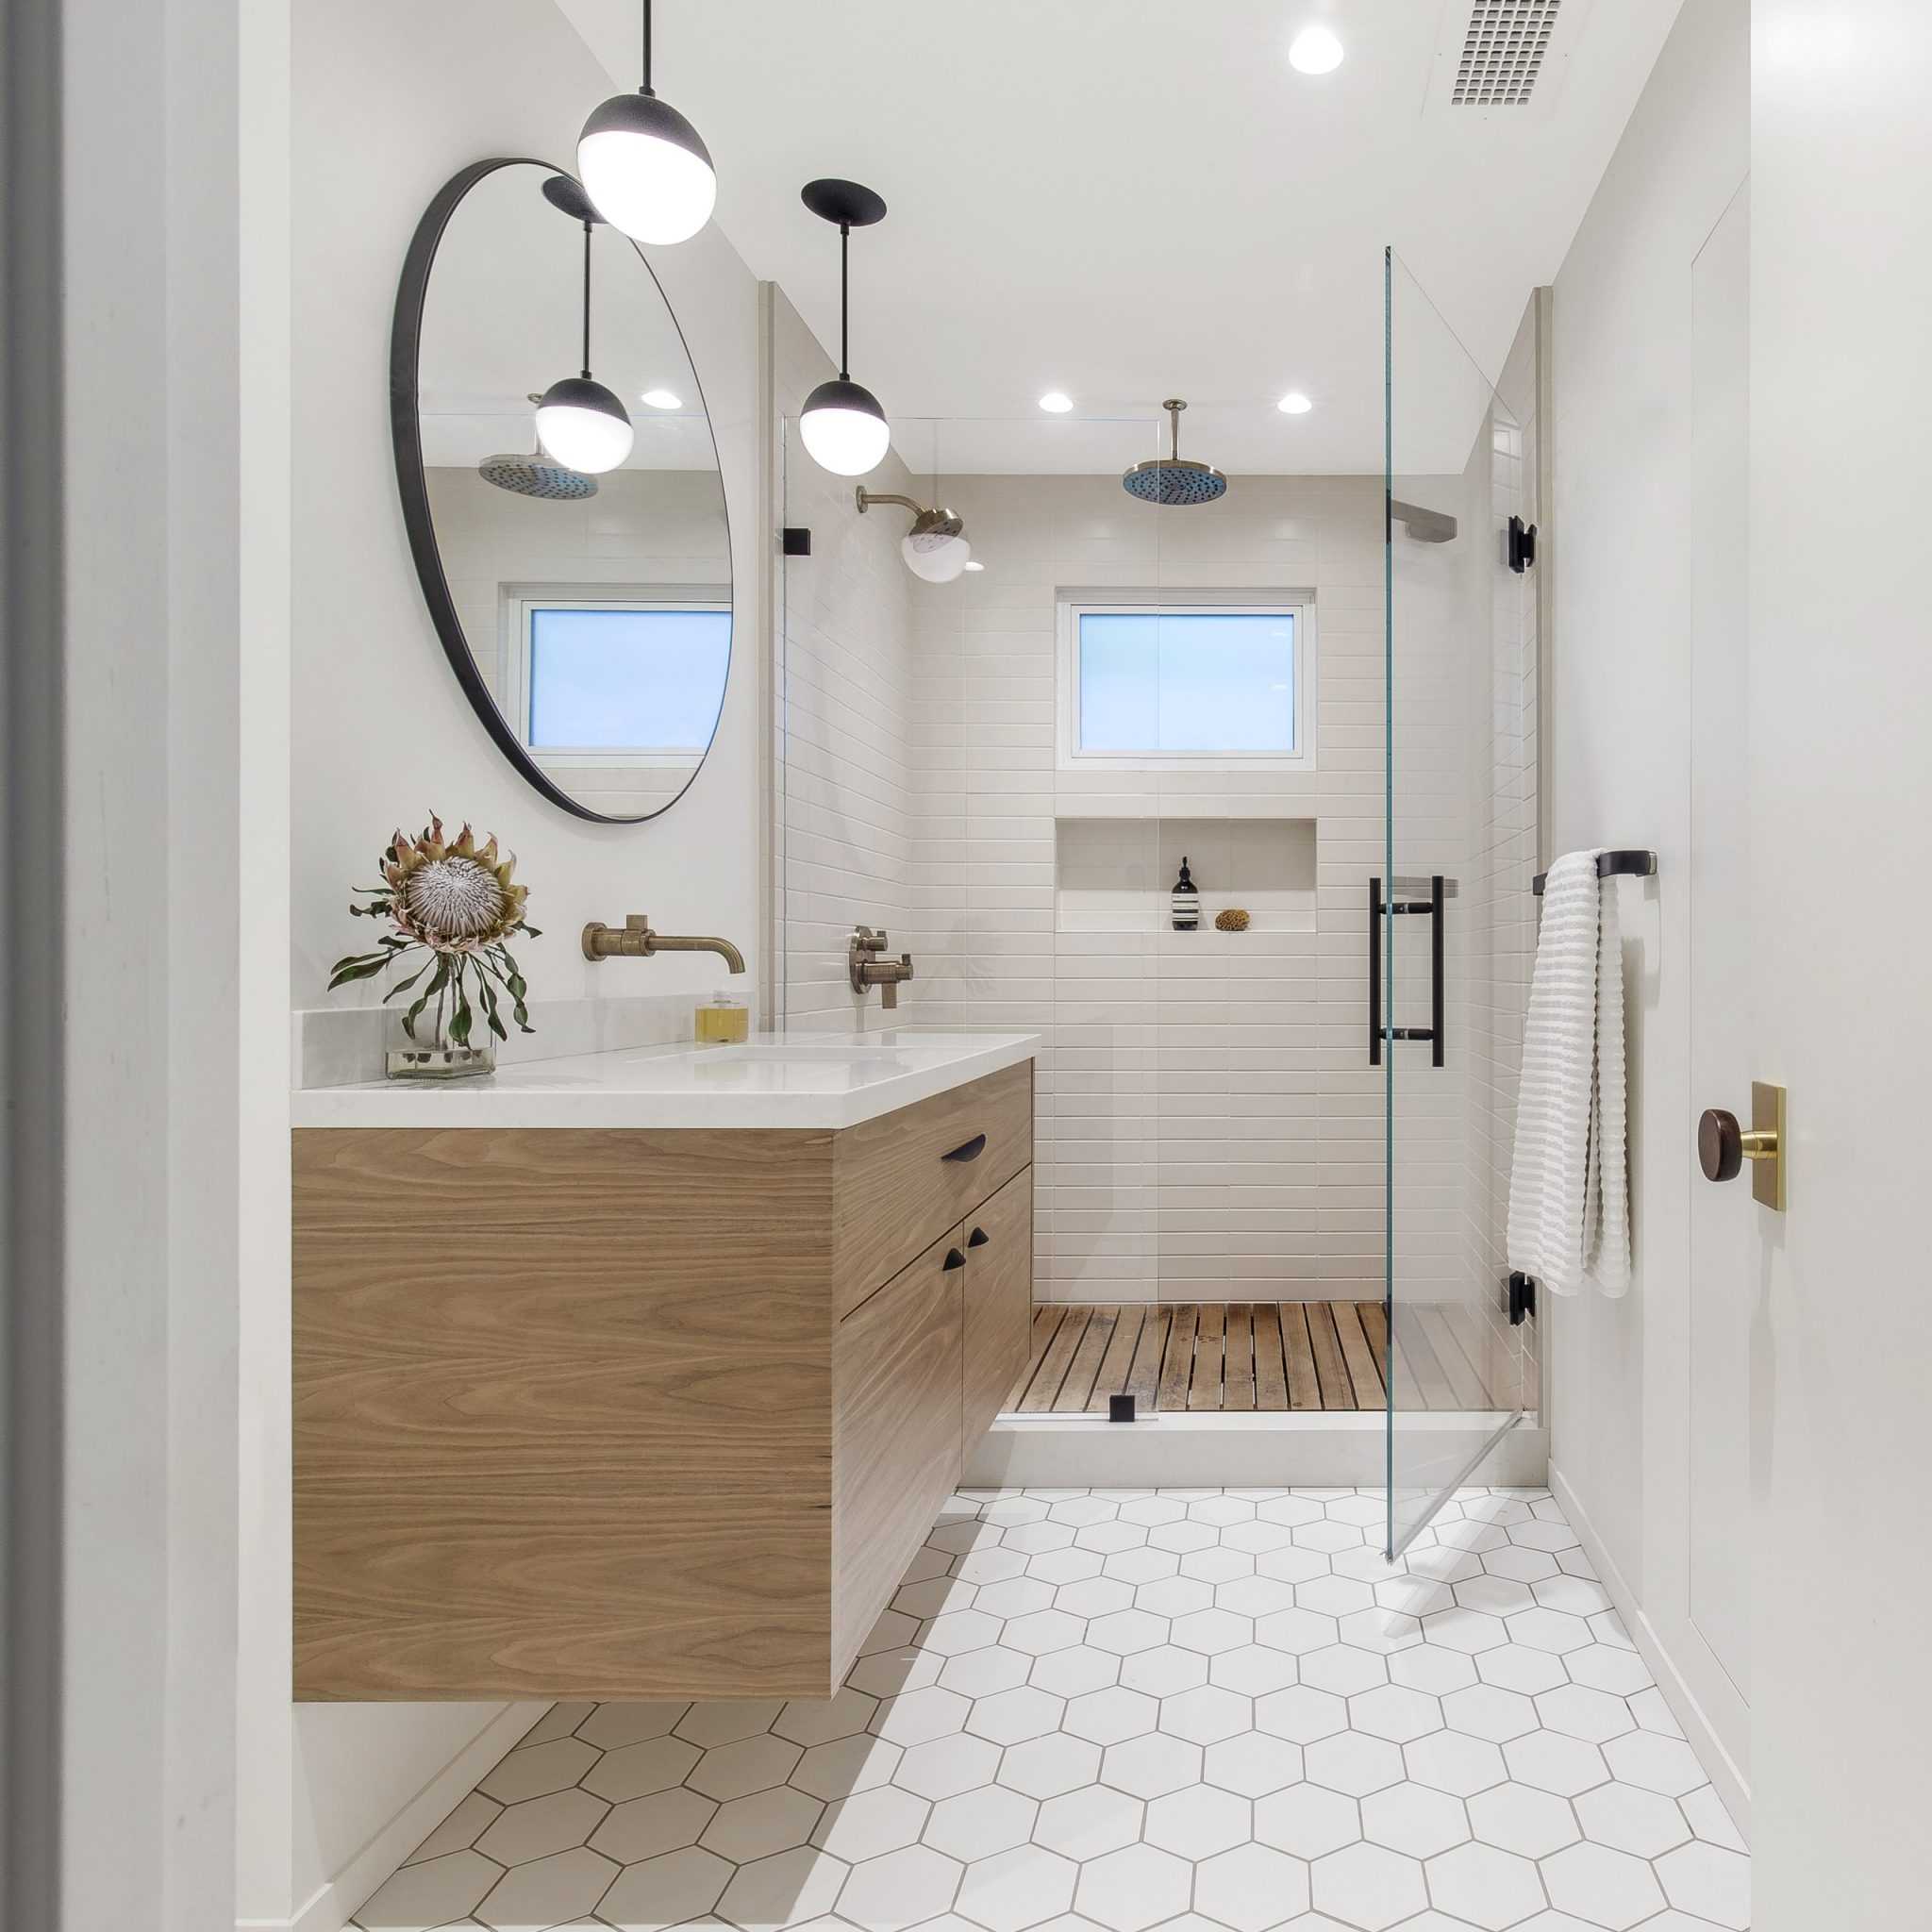 20 Impressive Mid-Century Modern Bathroom Designs You Must See - 20 Impressive MiD Century MoDern Bathroom Designs You Must See 3 2048x2048